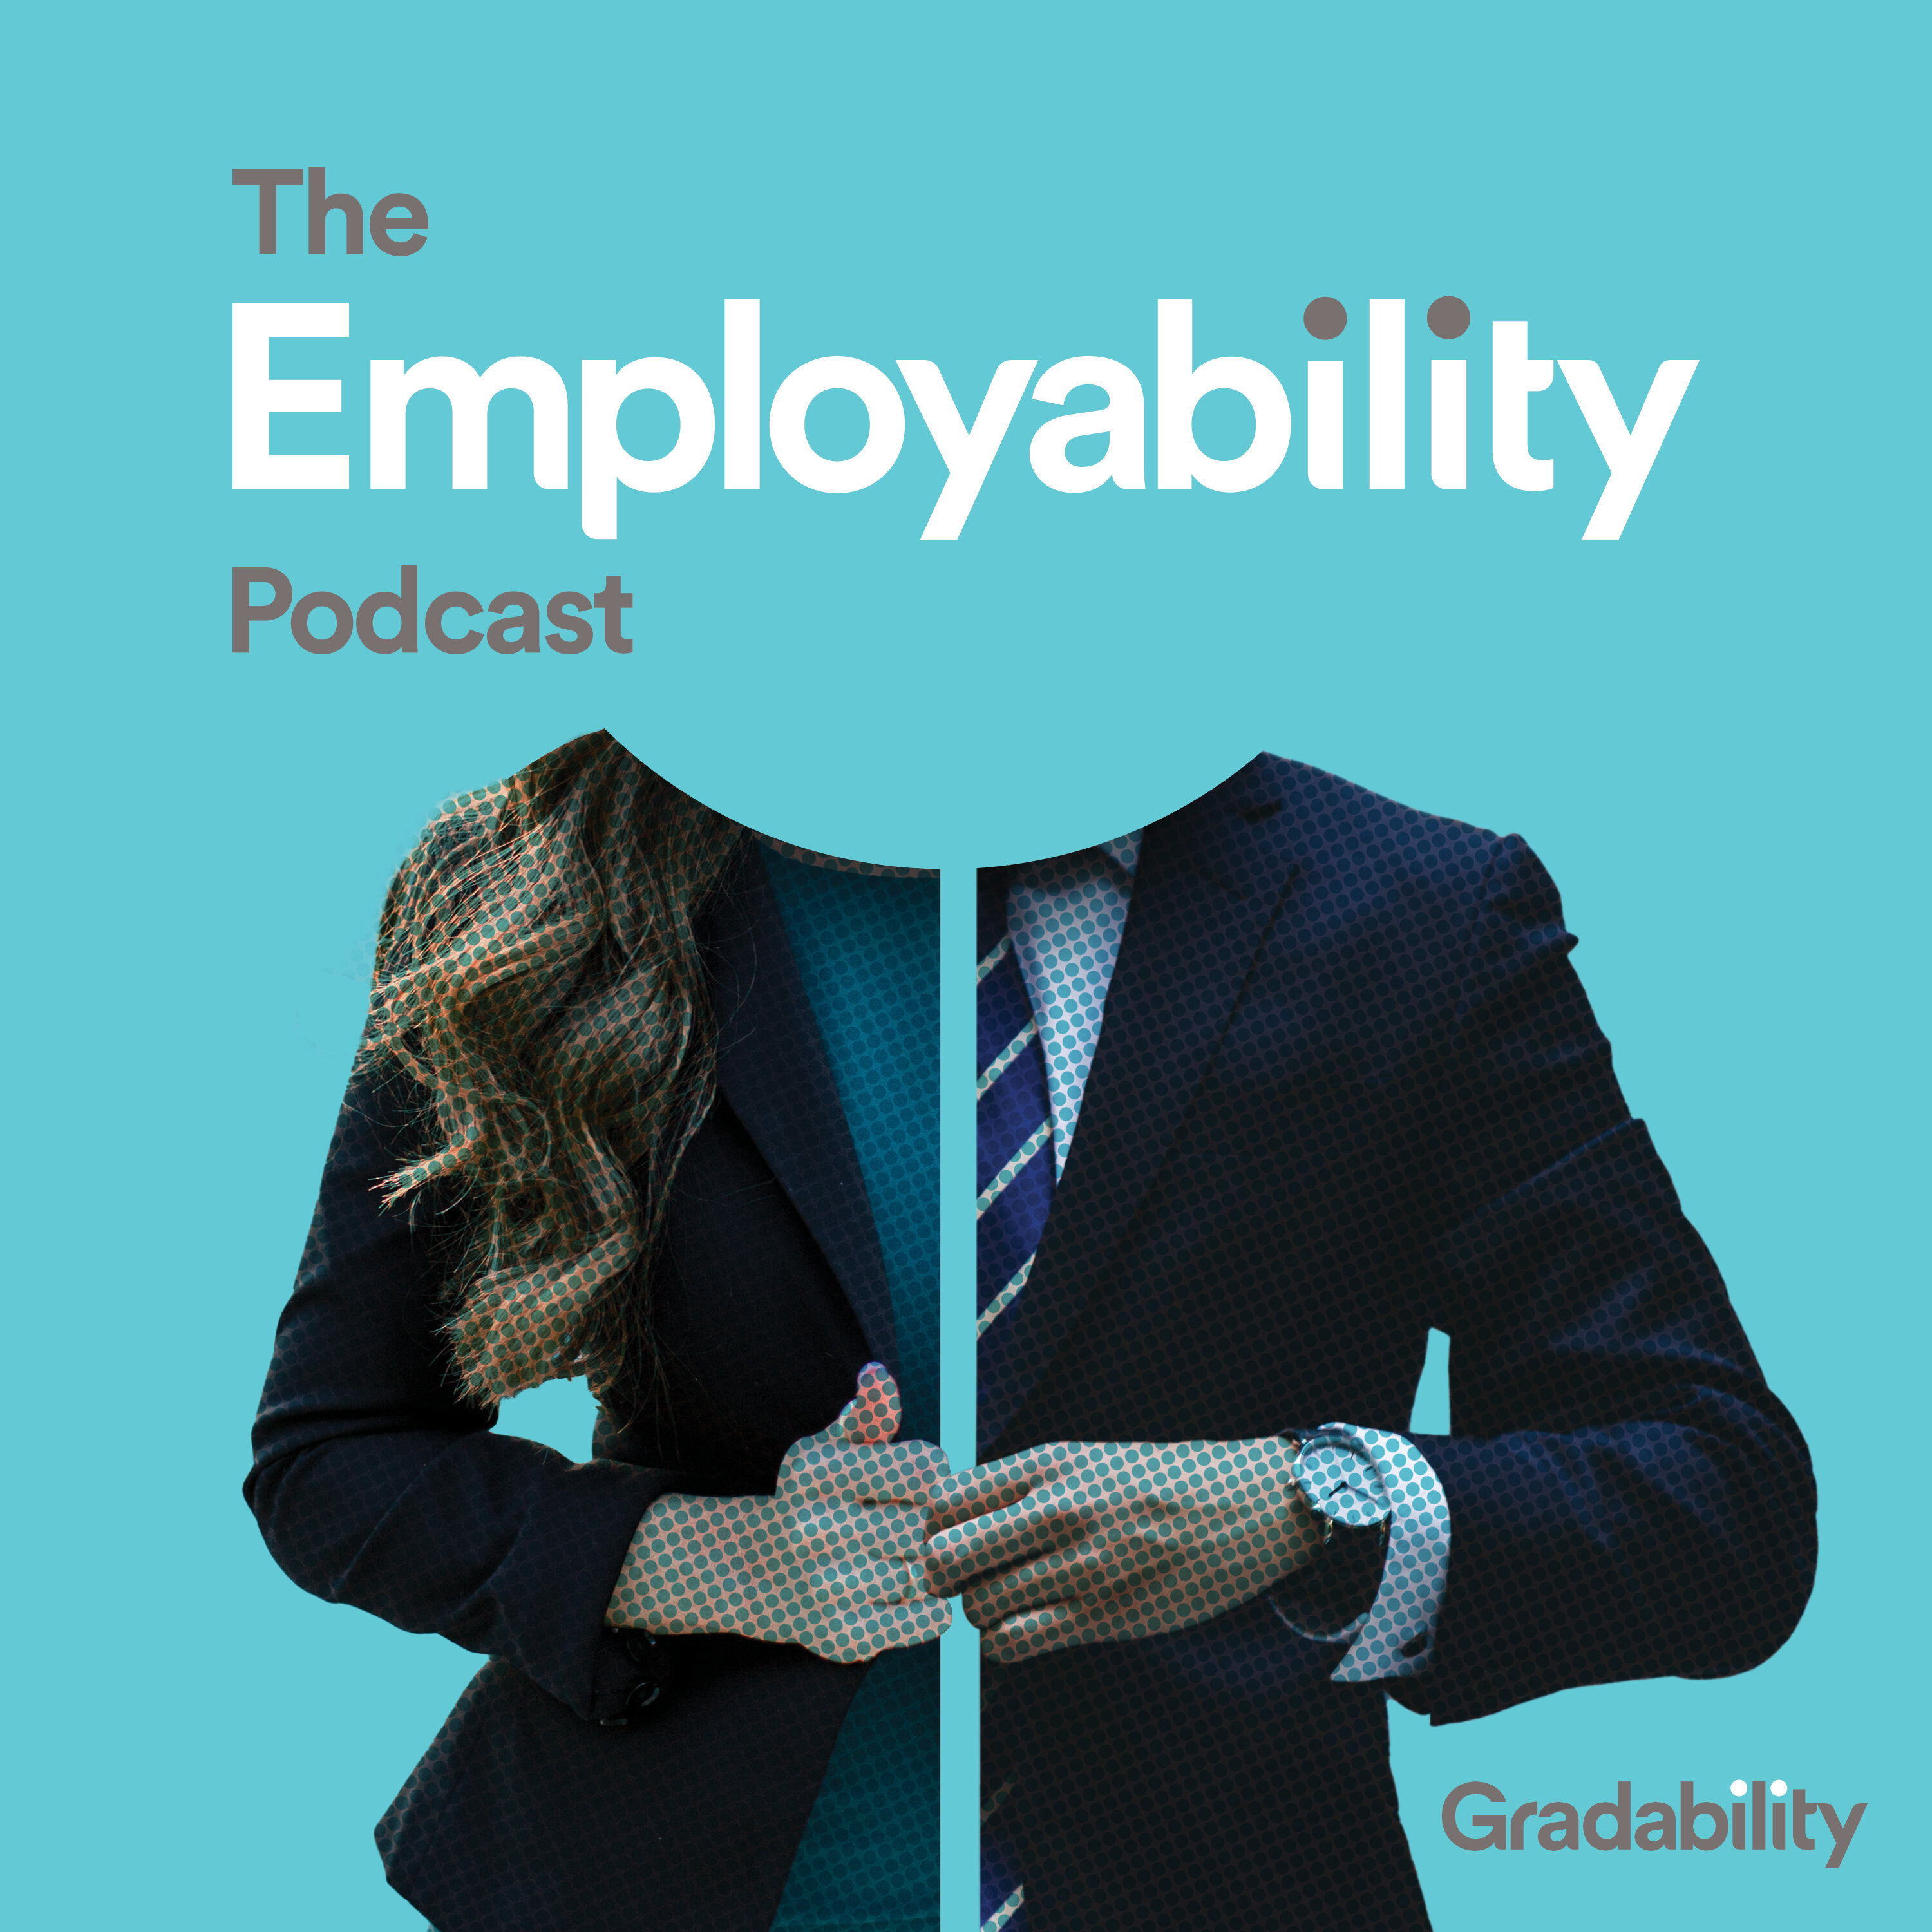 The Employability Podcast